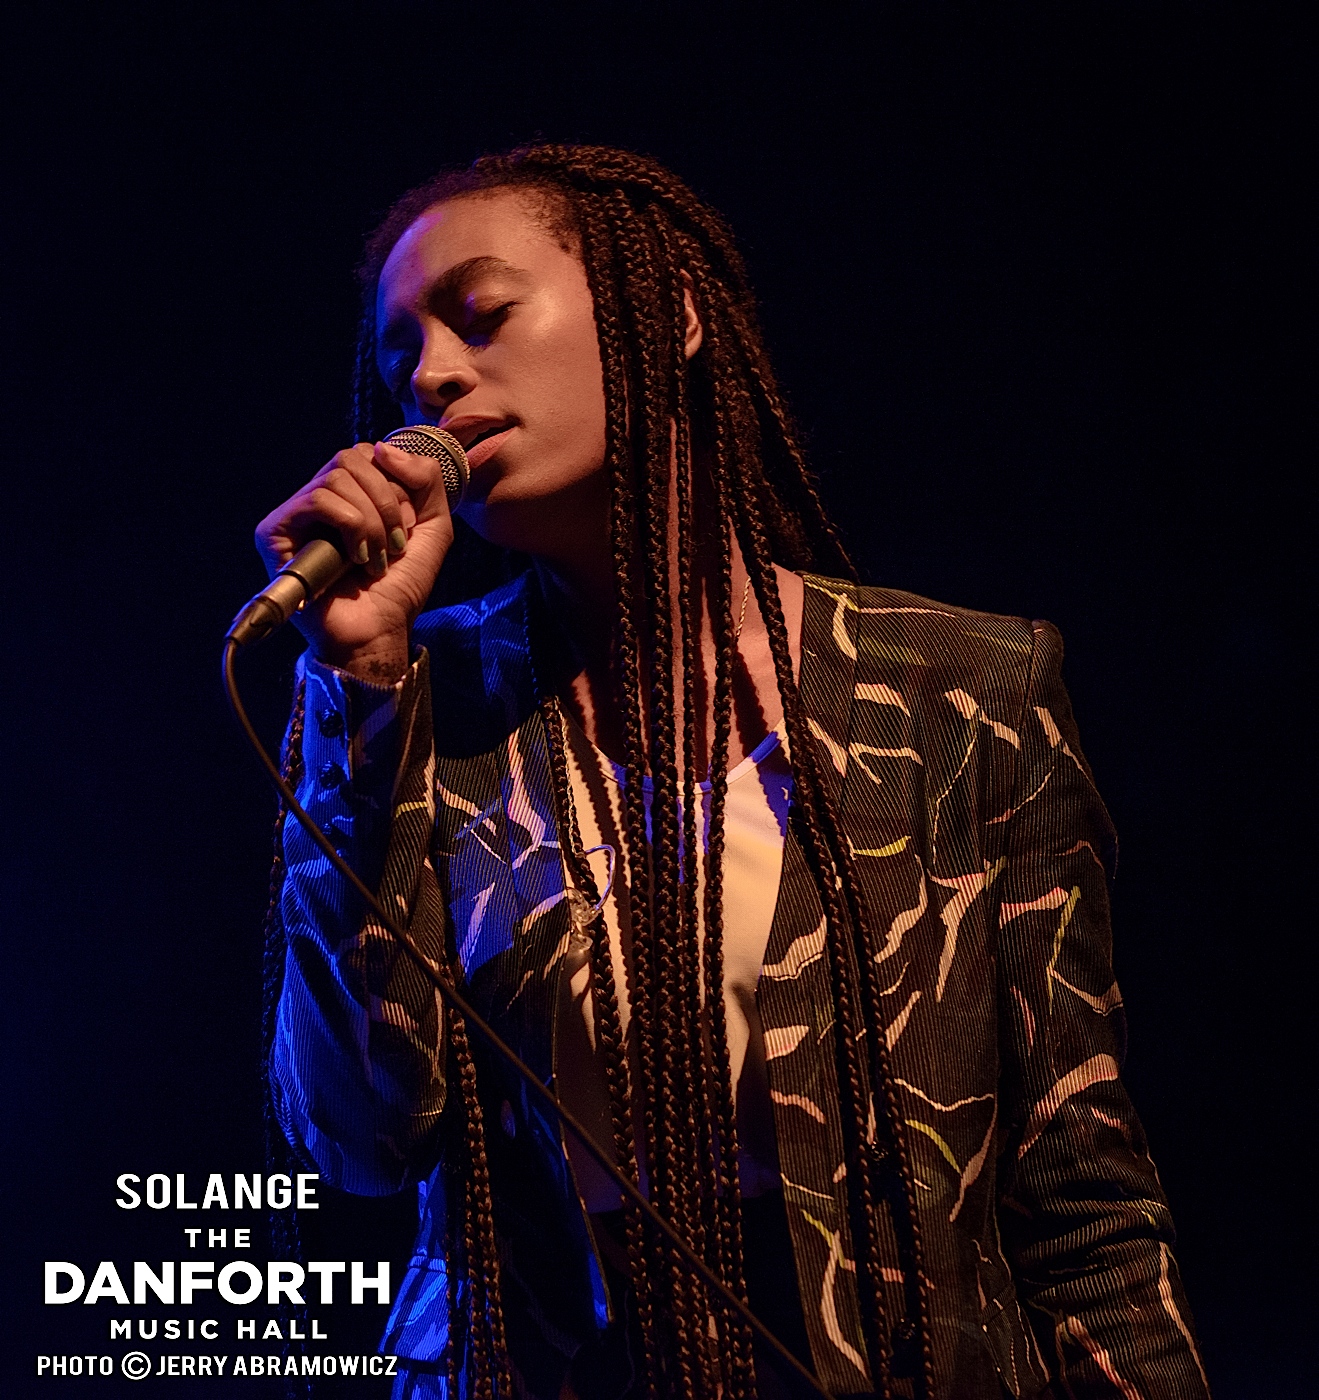 SOLANGE plays at The Danforth Music Hall Toronto.